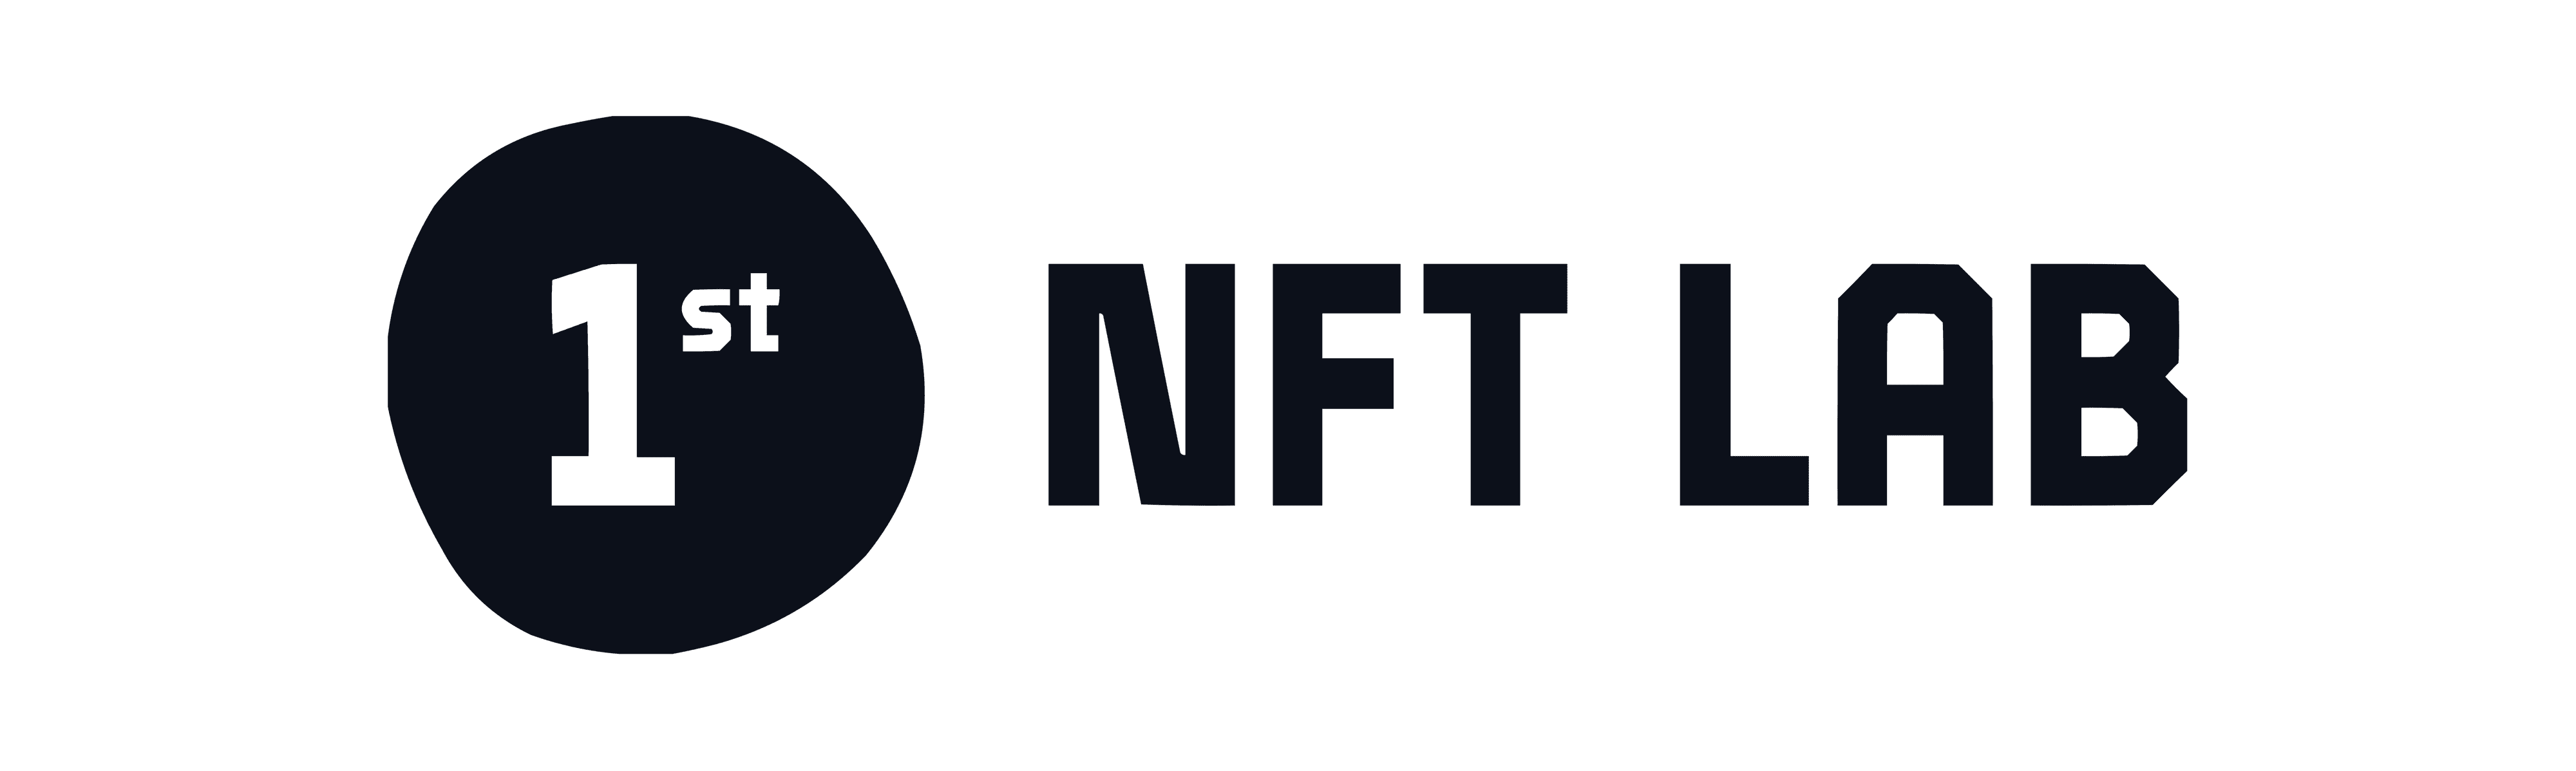 First-NFT-Lab 横幅